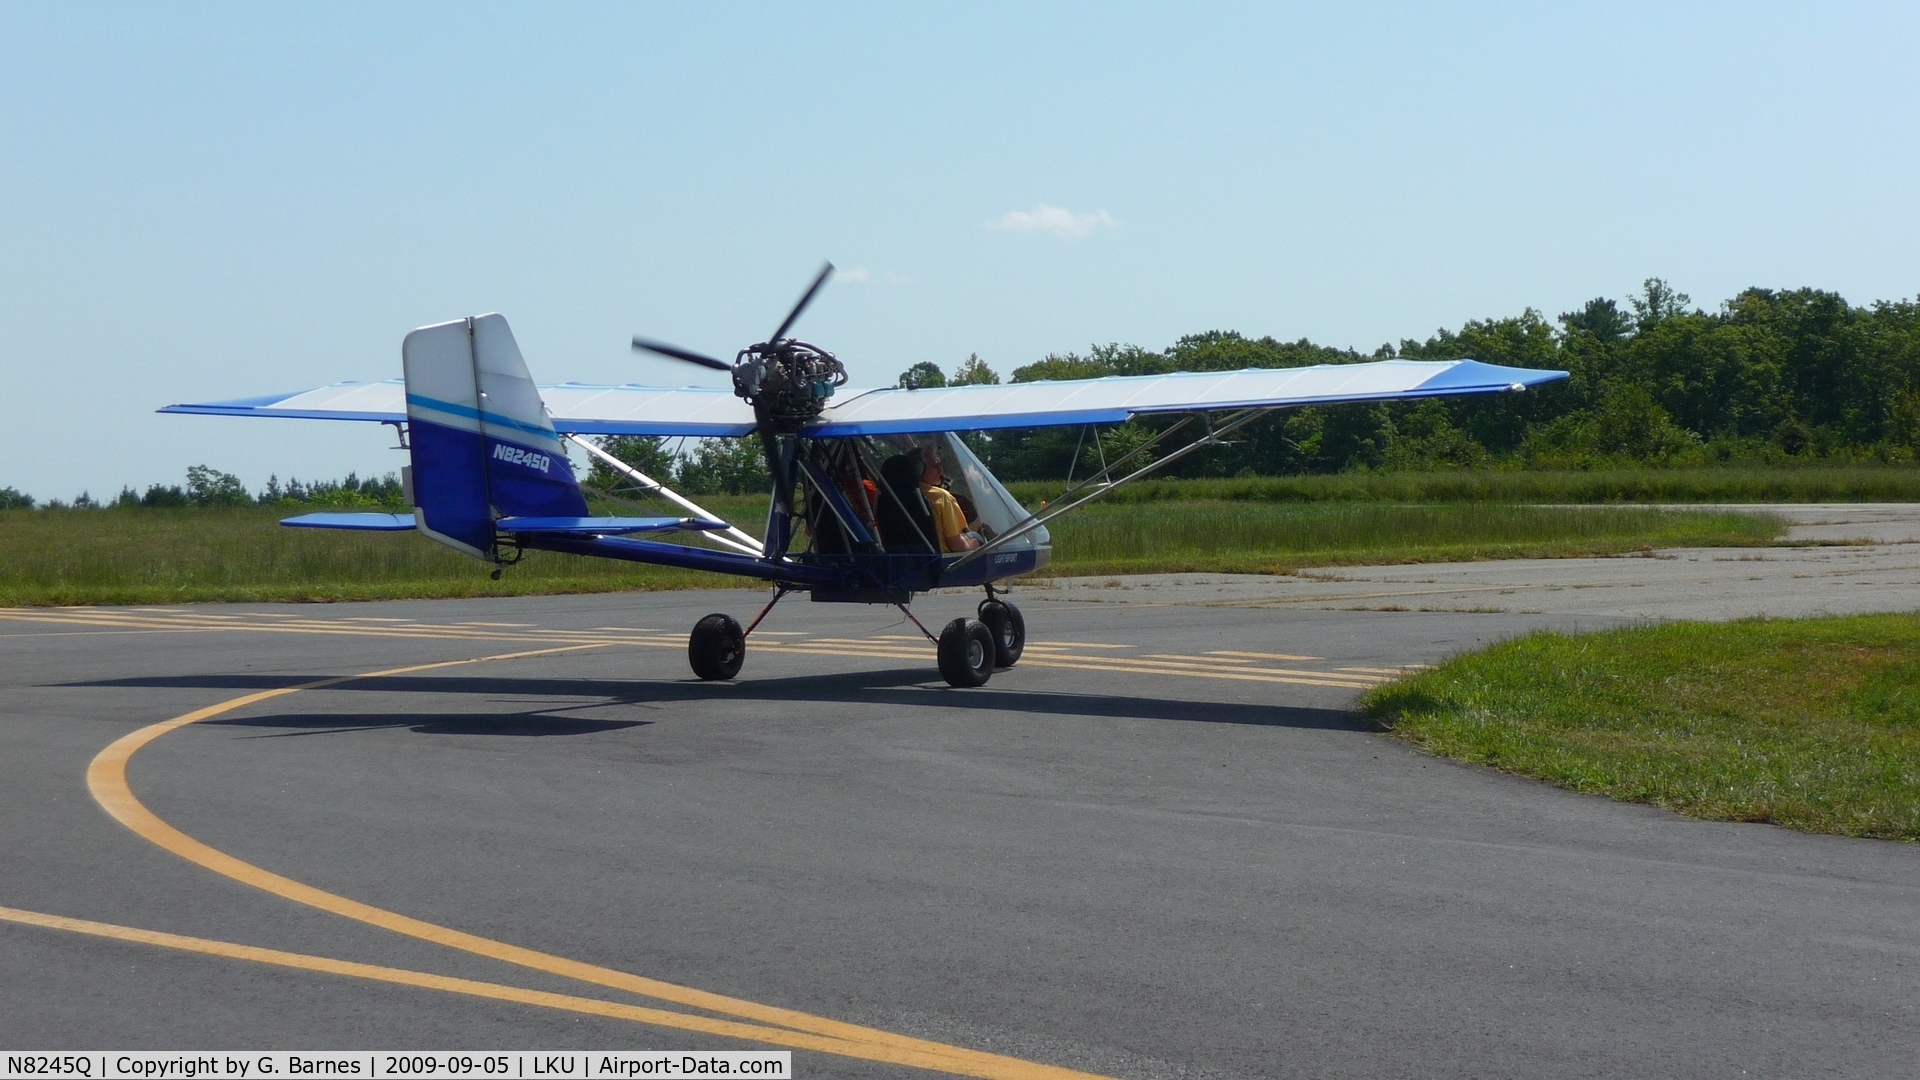 N8245Q, 2001 Rans S-12XL Airaile C/N 10990895, Ready for takeoff from the Louisa County 2009 Annual Air Show